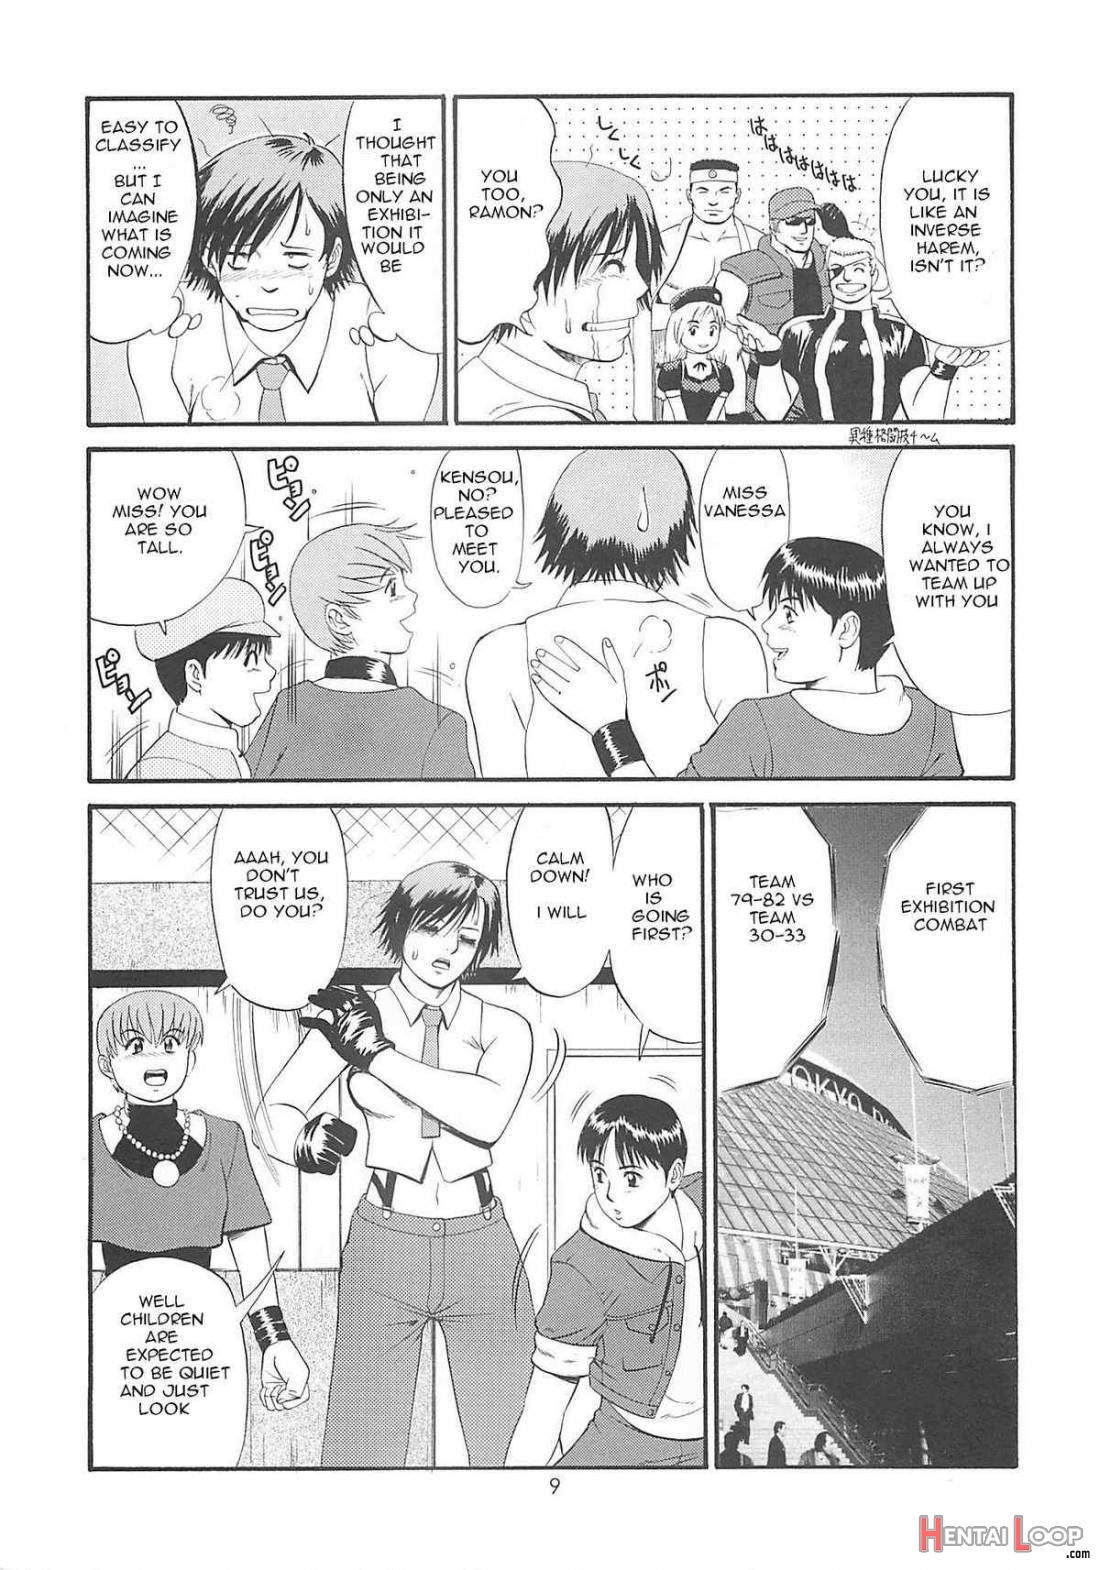 The Yuri&Friends 2000 page 9